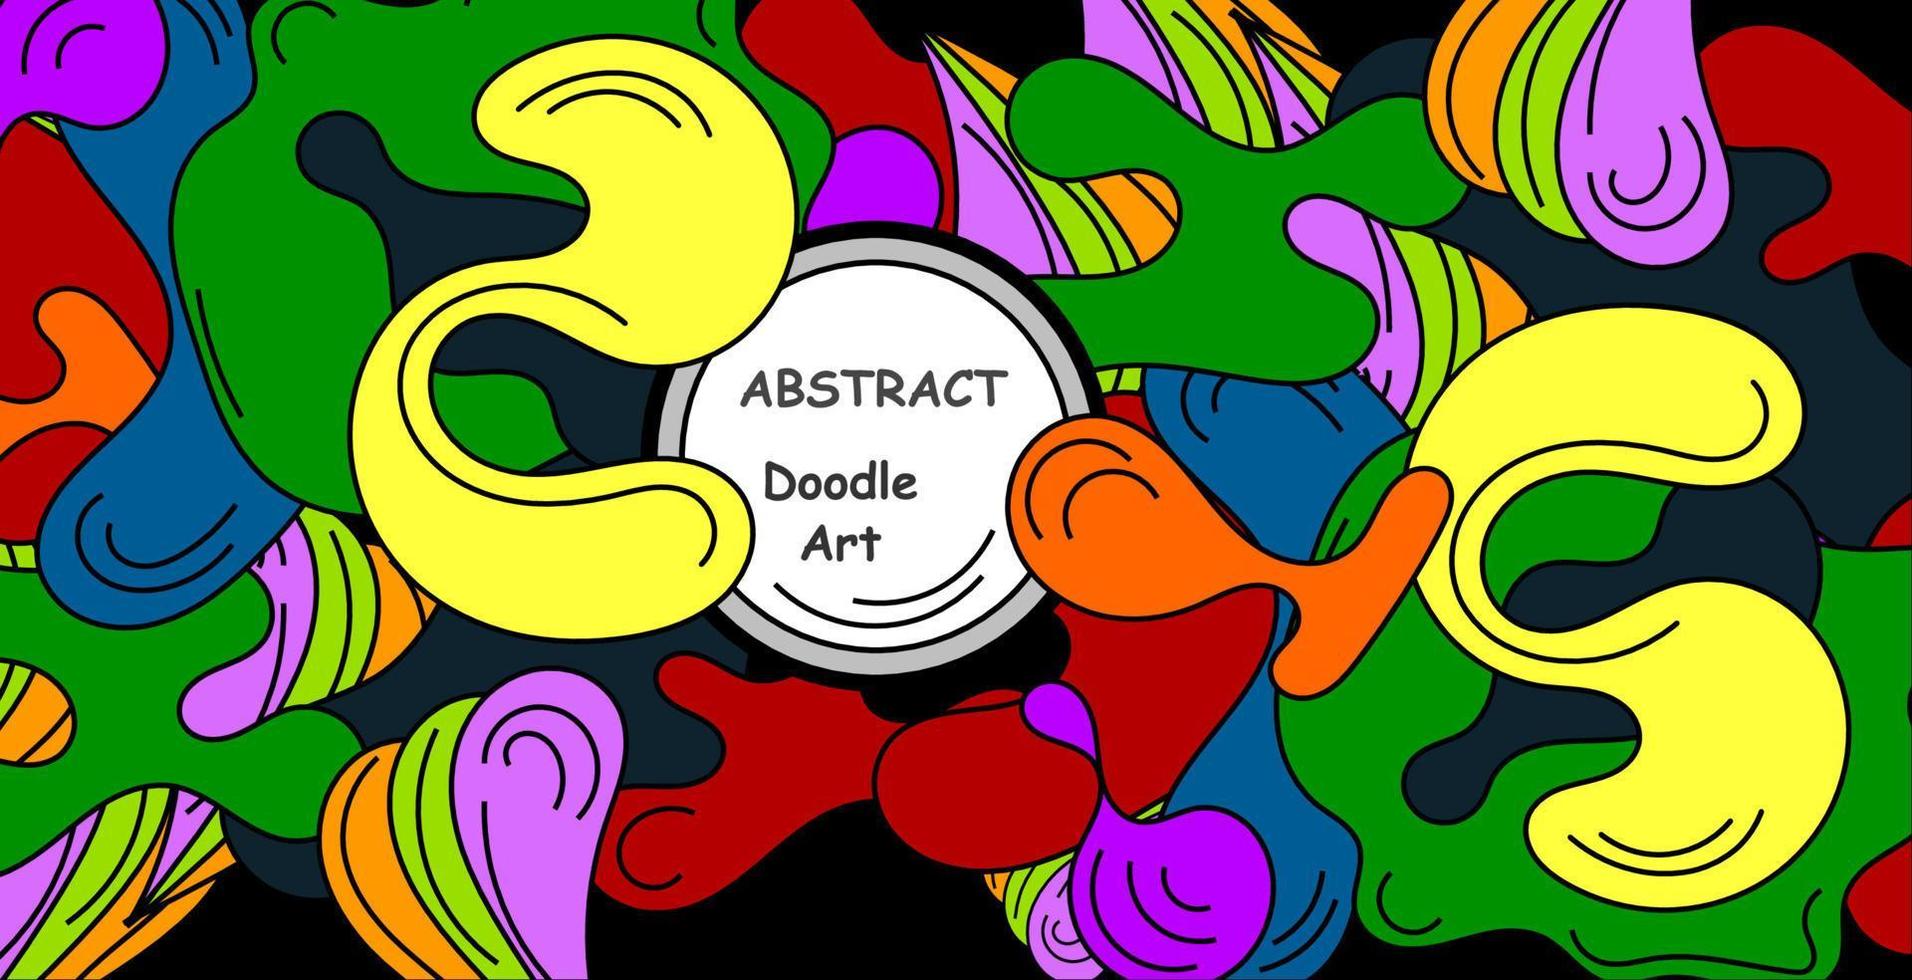 arquivo eps vetorial de download gratuito de arte abstrata doodle vetor